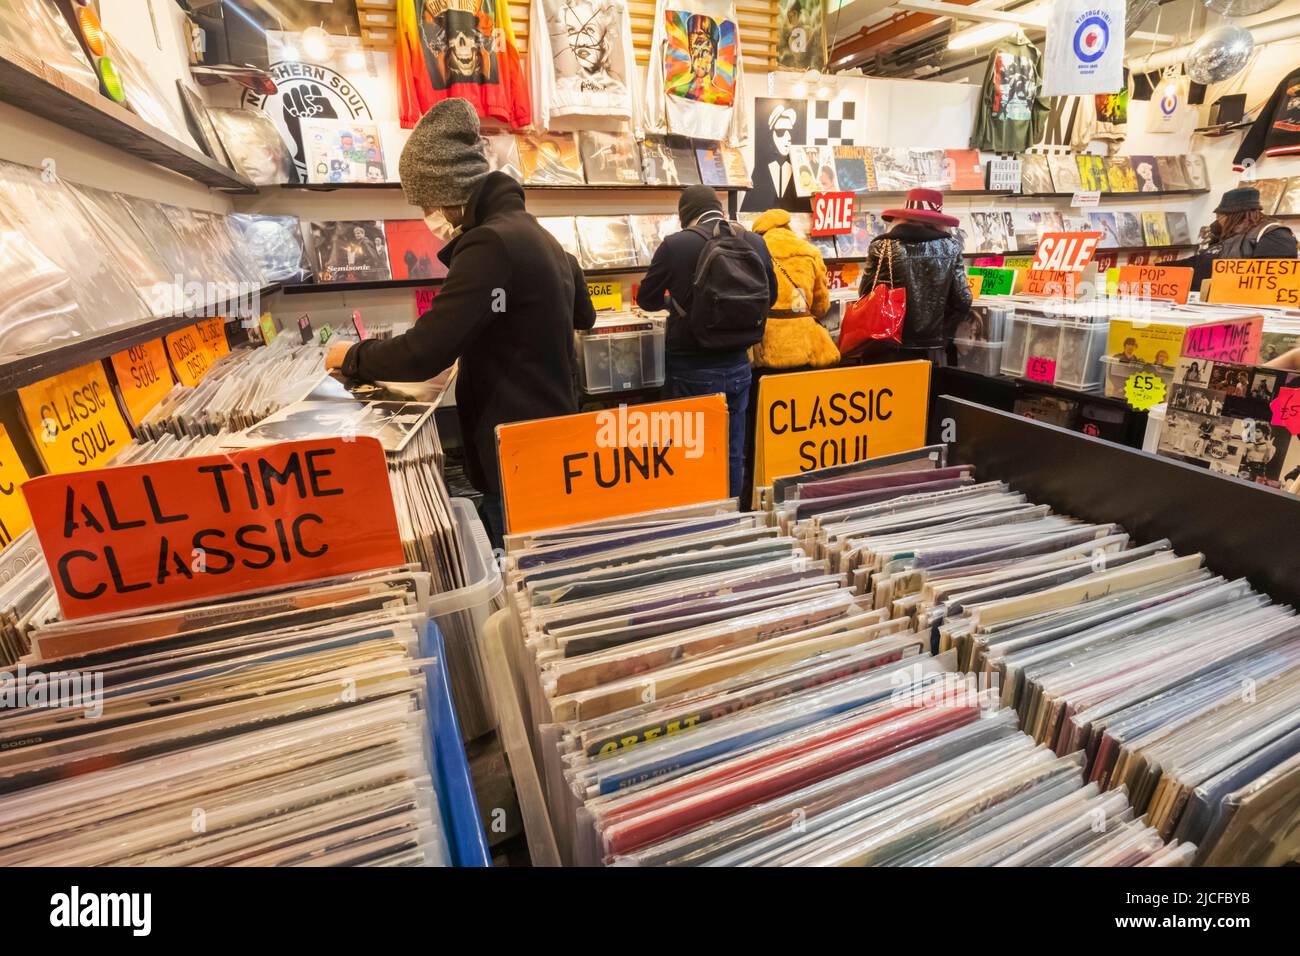 England, London, Shoreditch, Brick Lane, Vintage Record Shop, Customers Looking at Vinyl LP Records Stock Photo